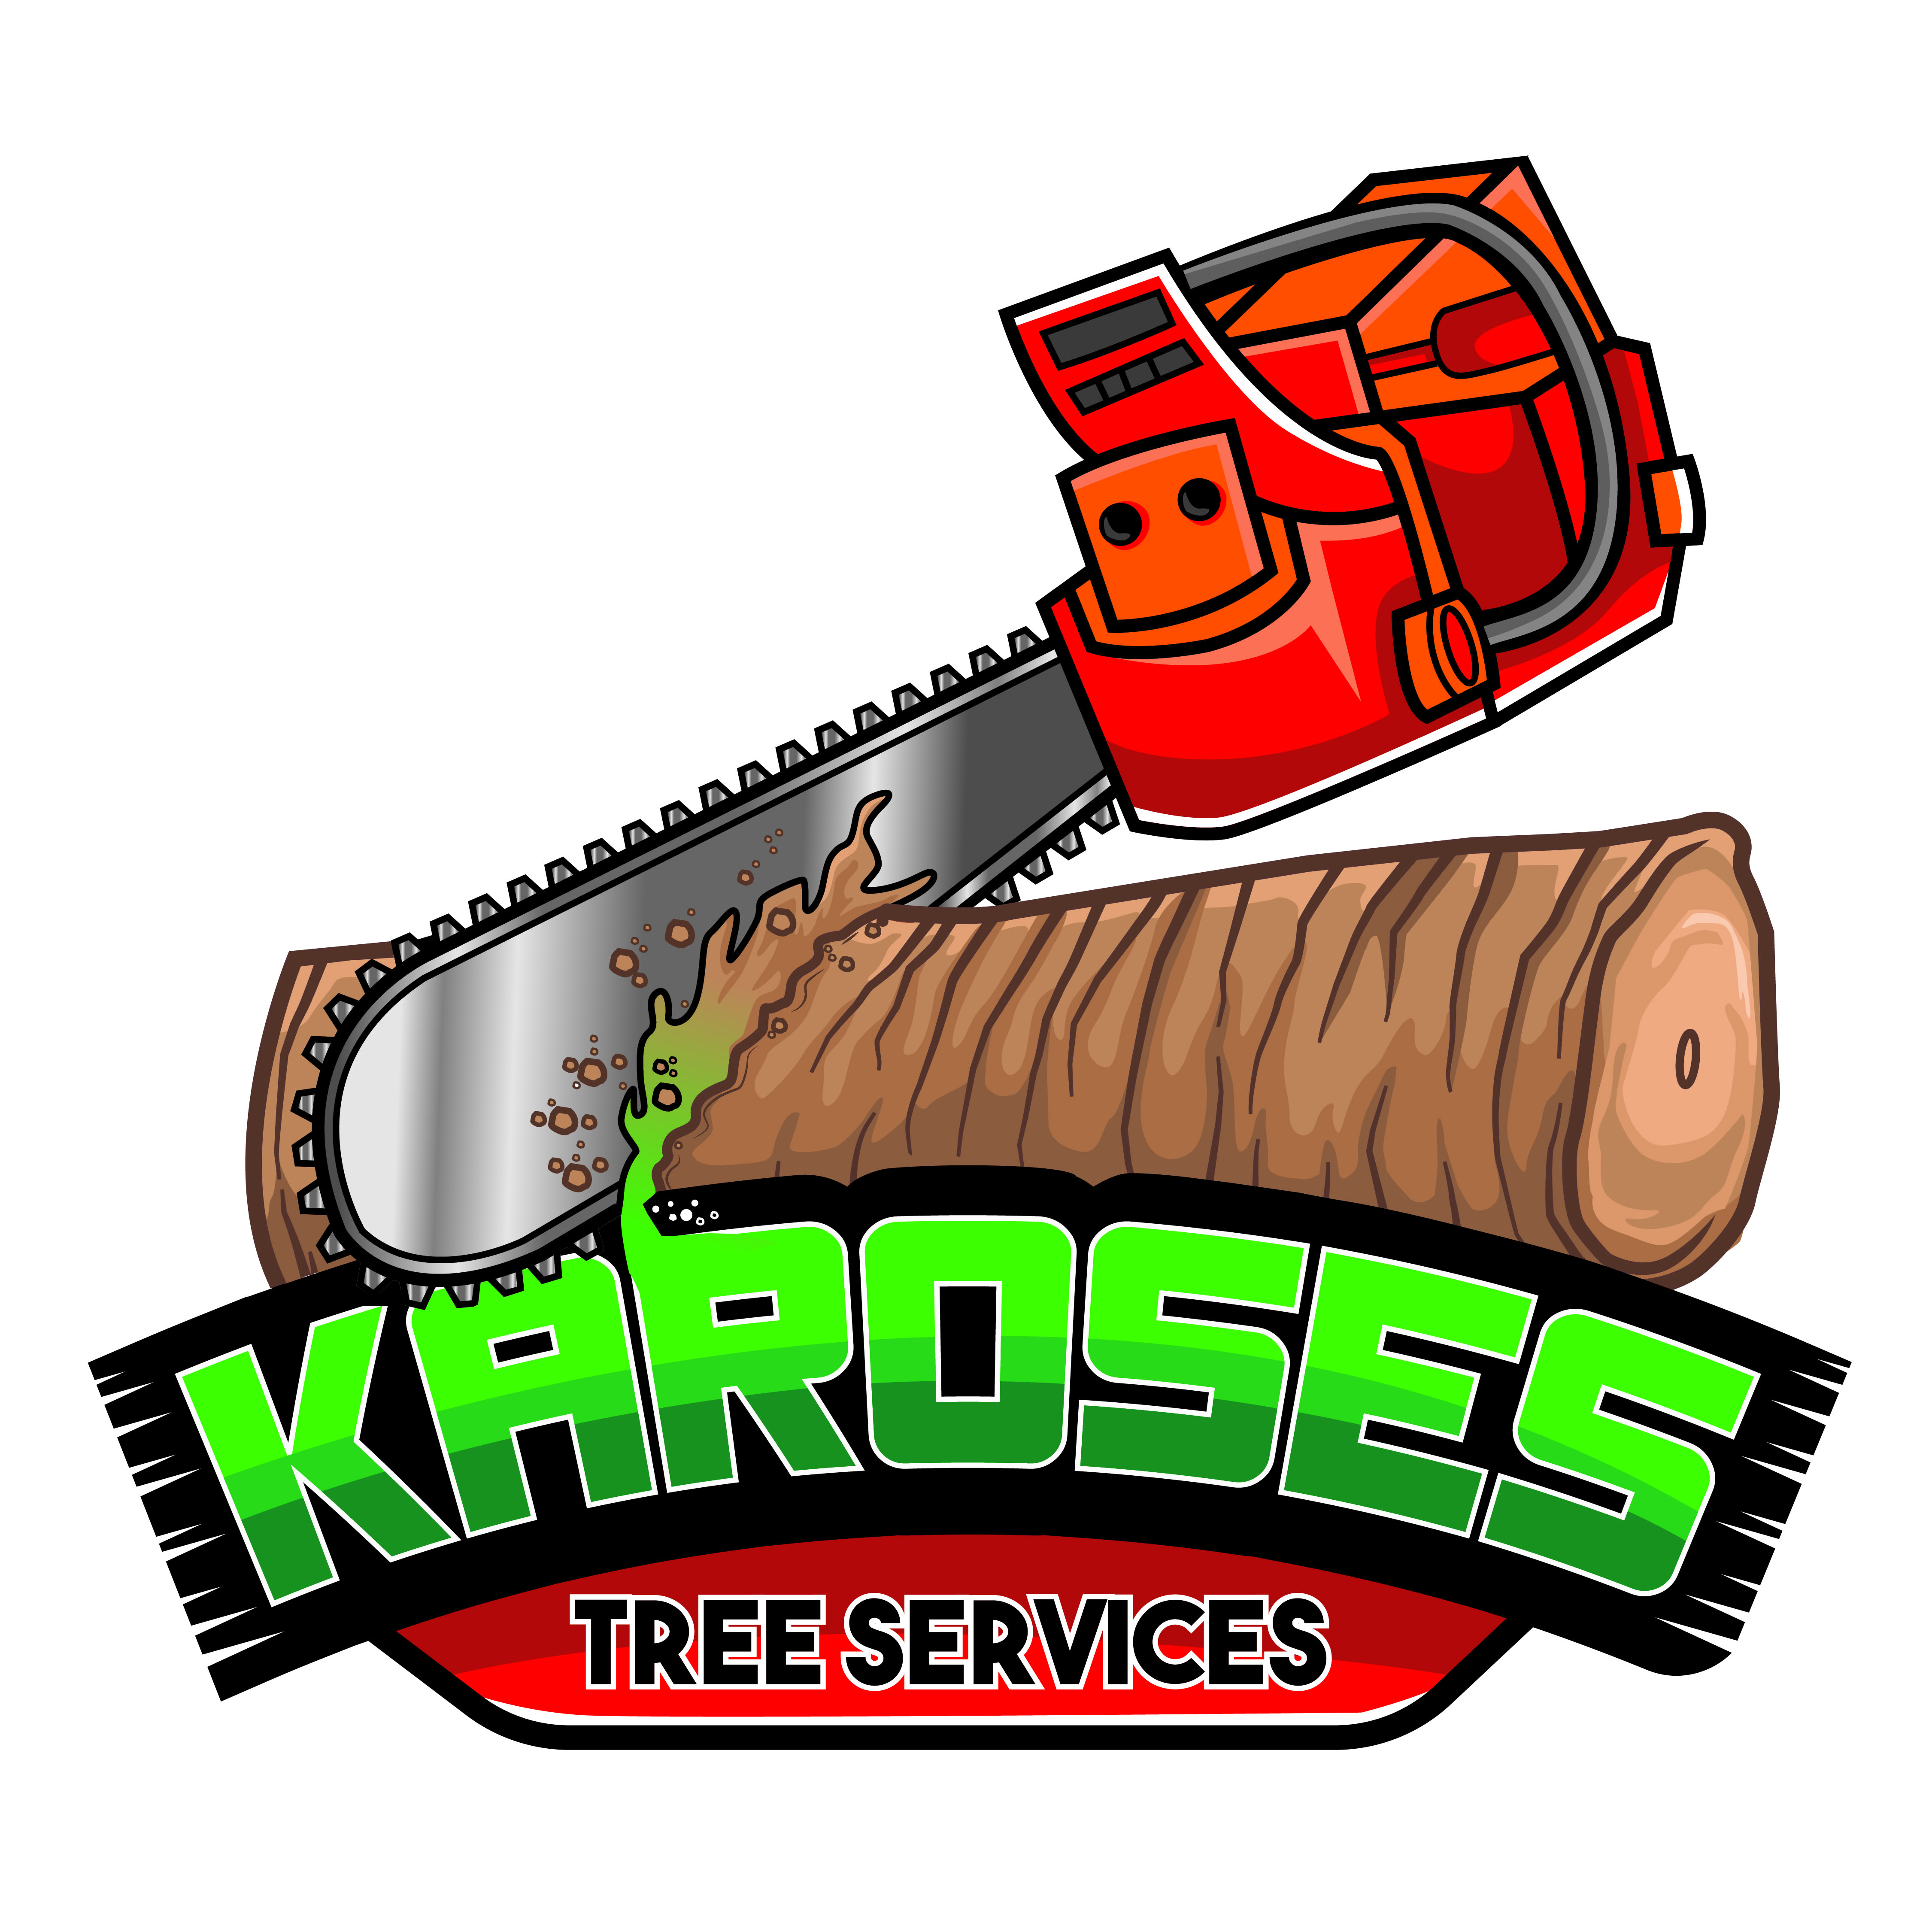 Karoses Tree Services